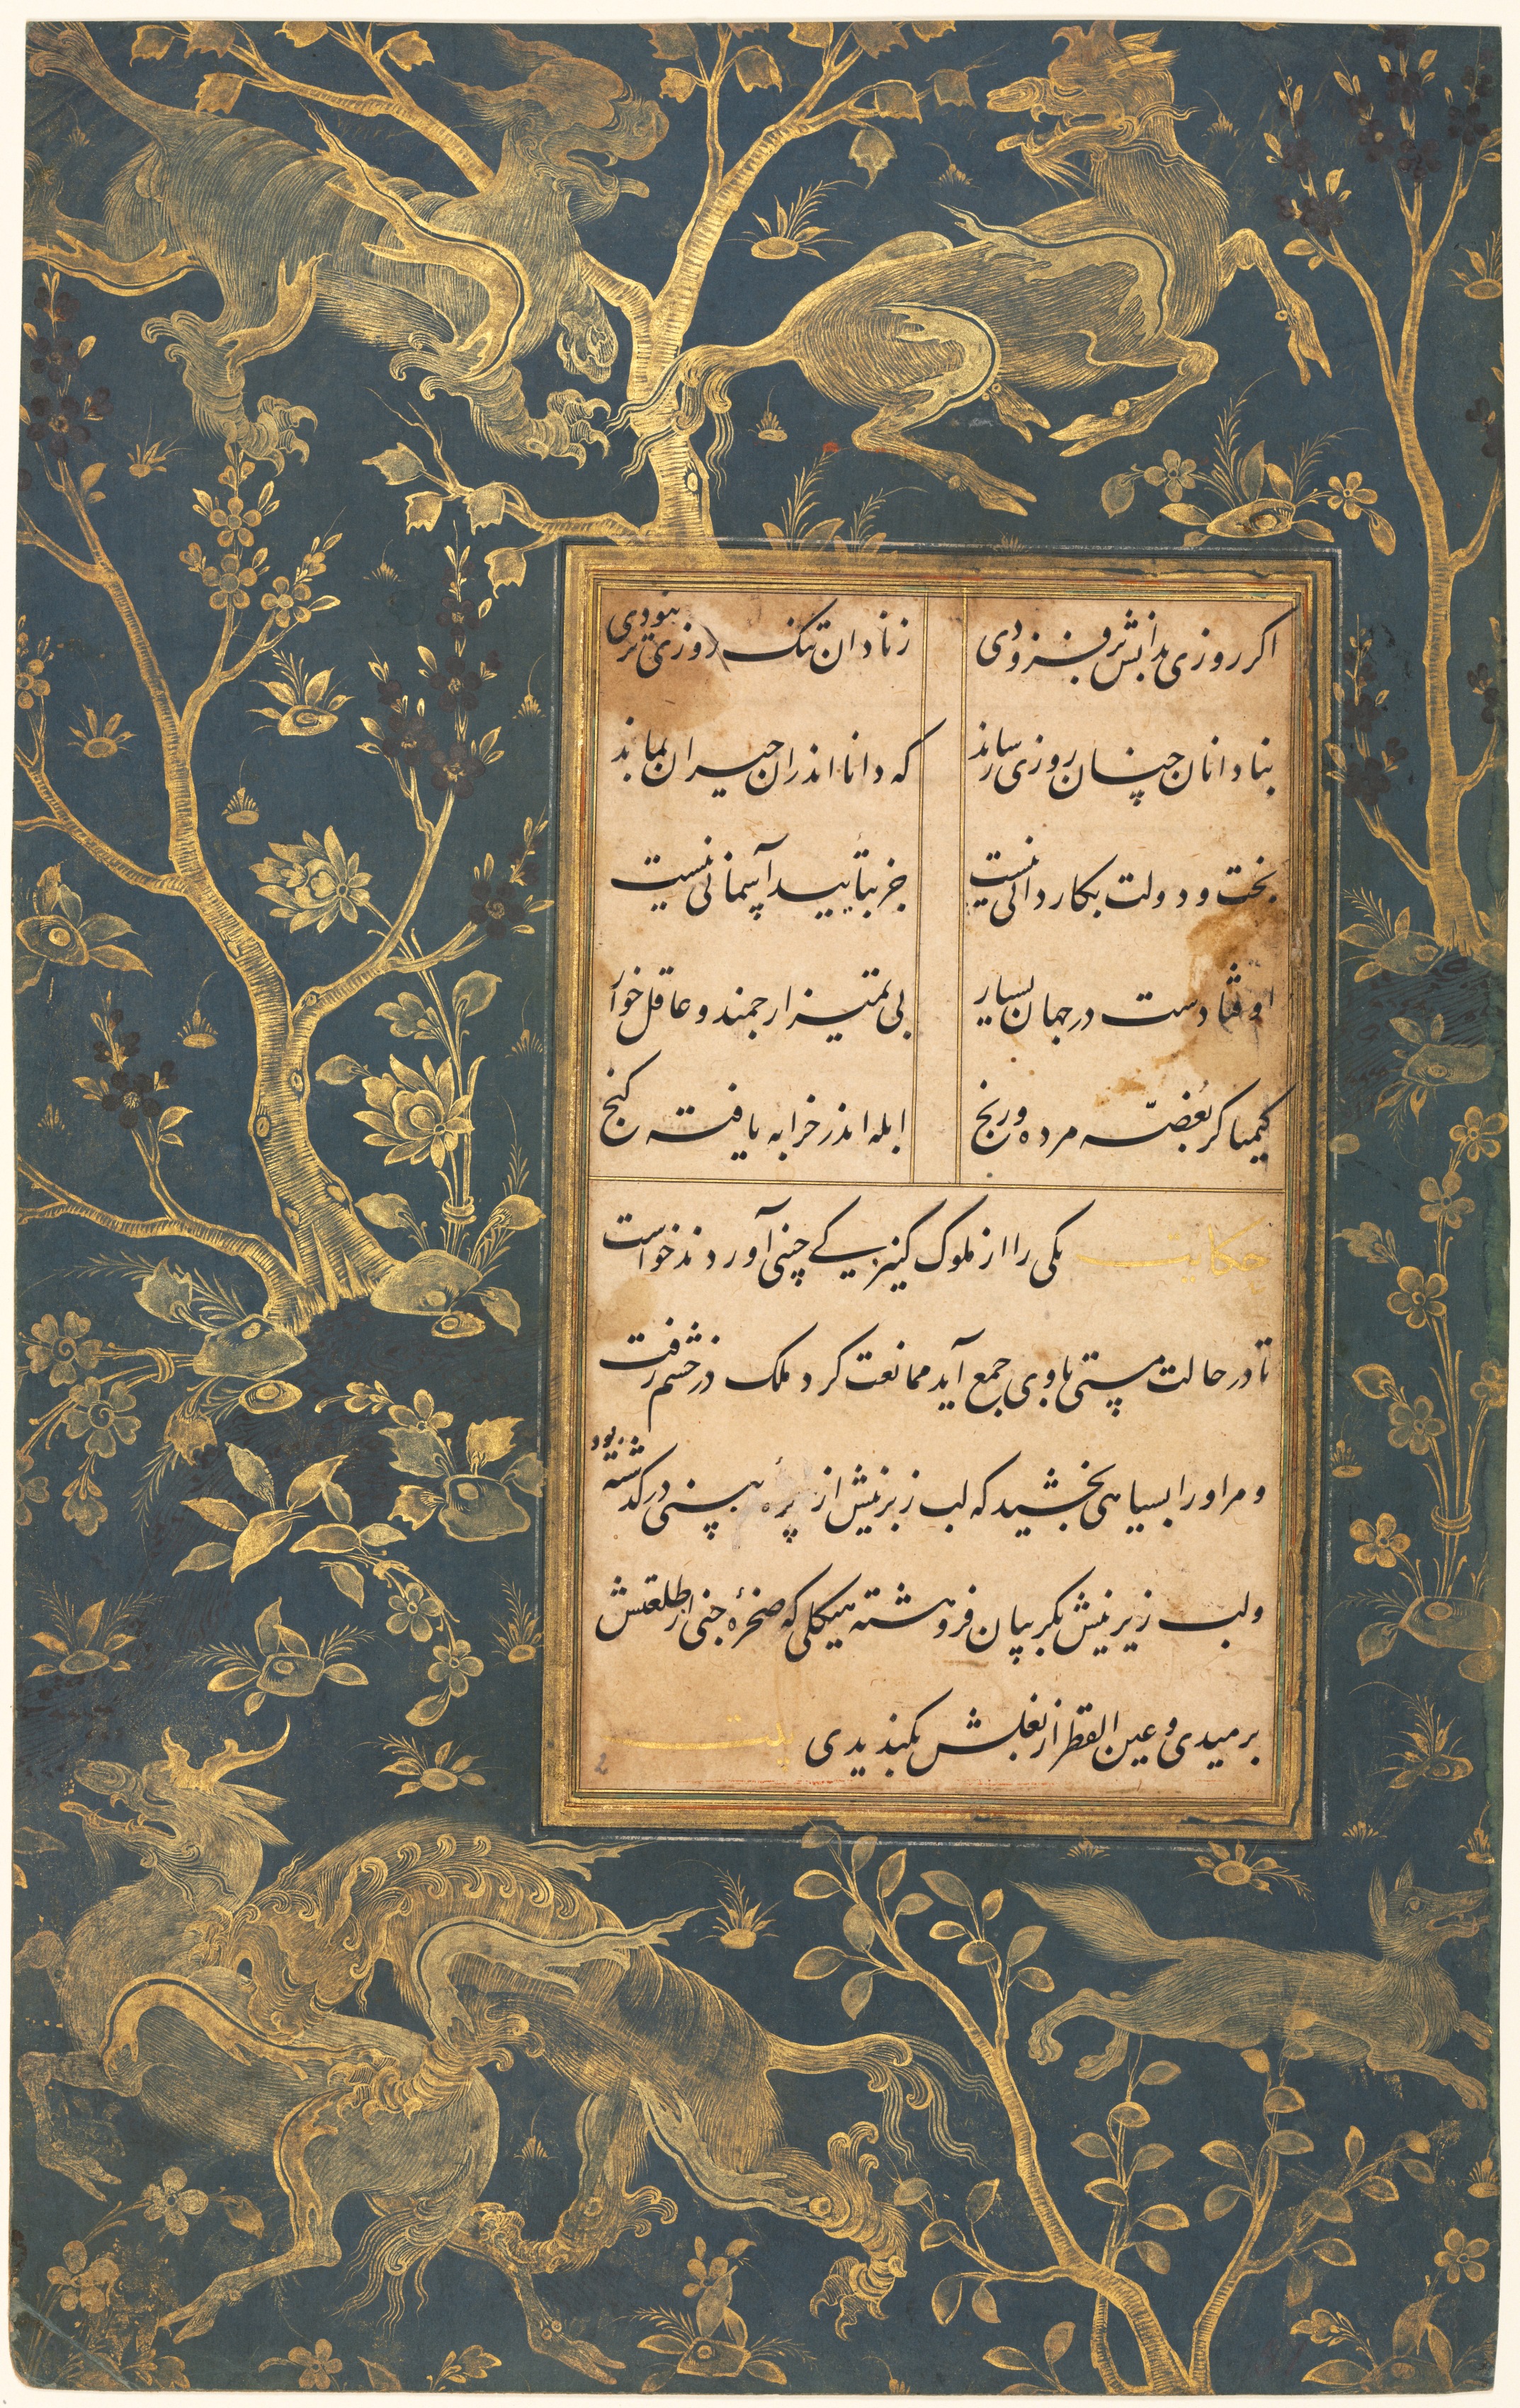 Illuminated Folio from a Gulistan (Rose Garden) of Sa'di (c. 1213–1291)